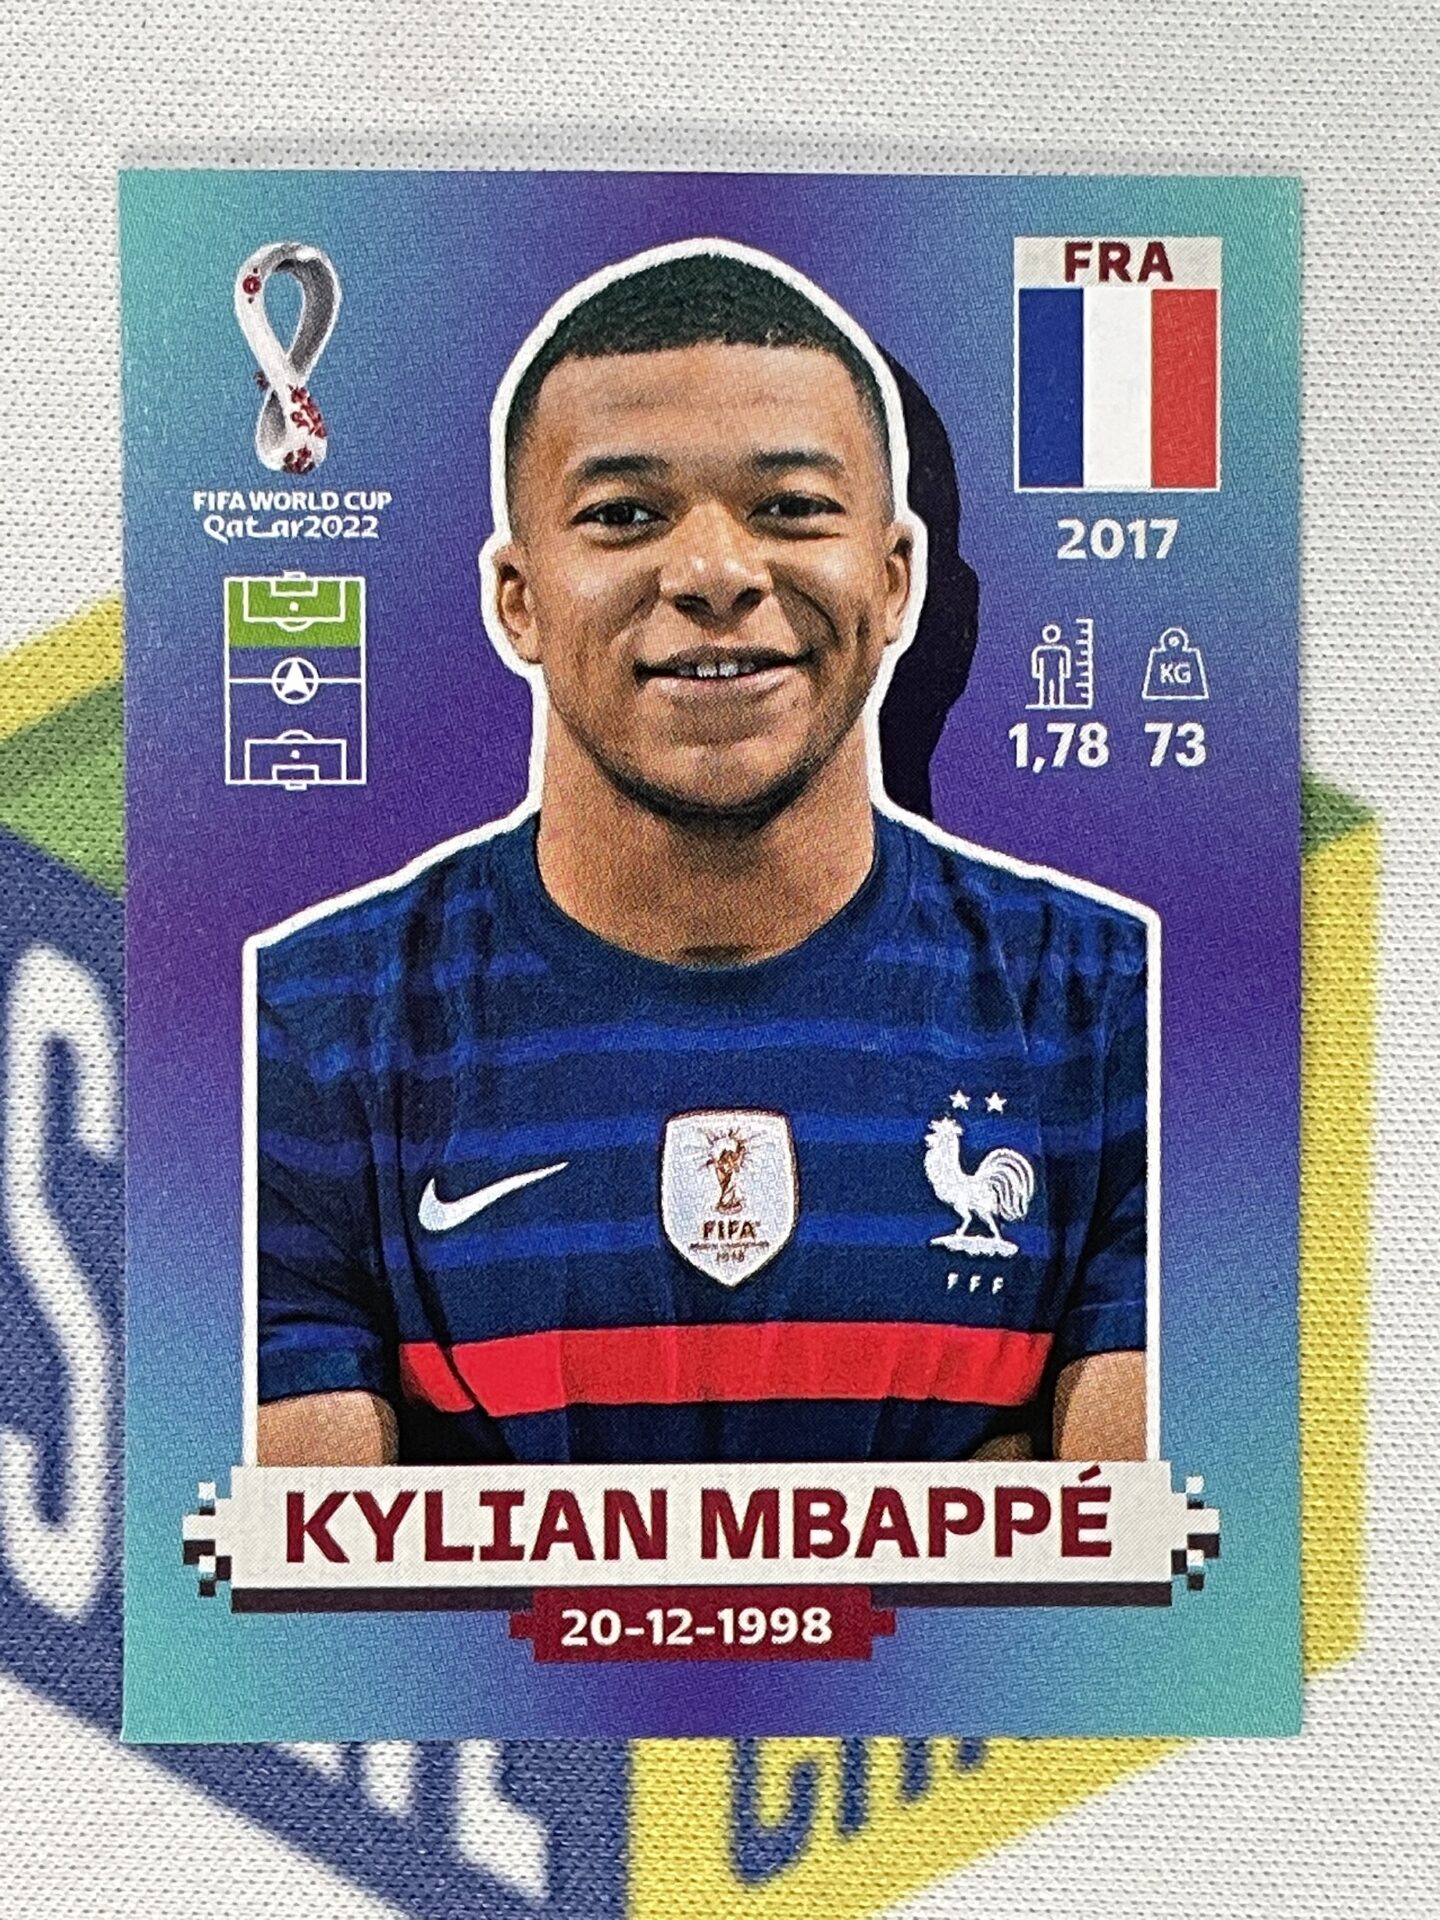 FRA19 Kylian Mbappé (France) Panini World Cup 2022 Sticker Solve